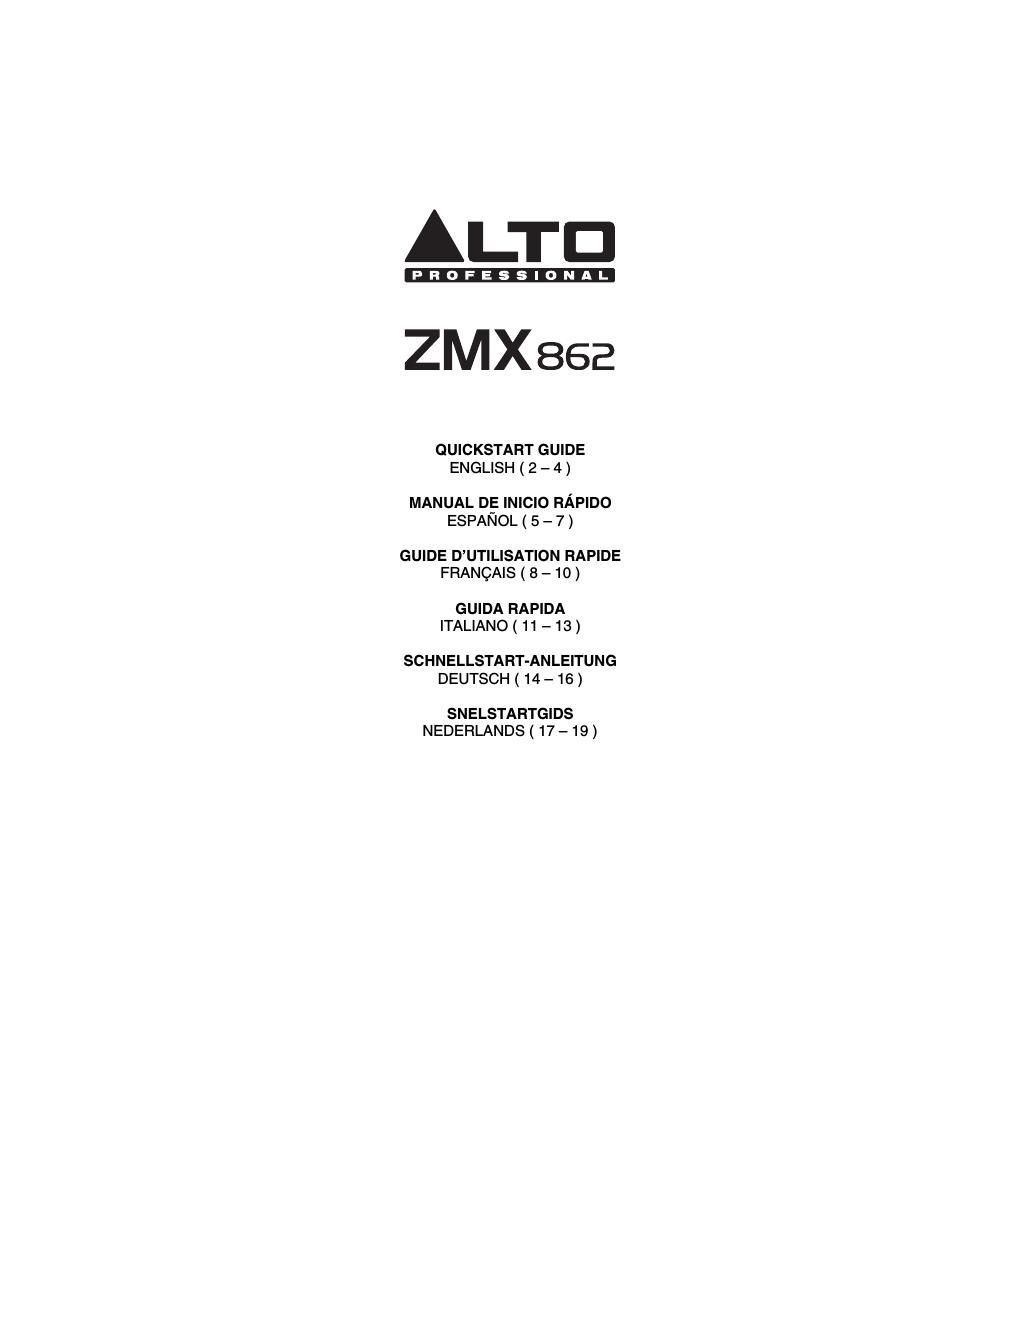 alto zmx 862 quickstart guide